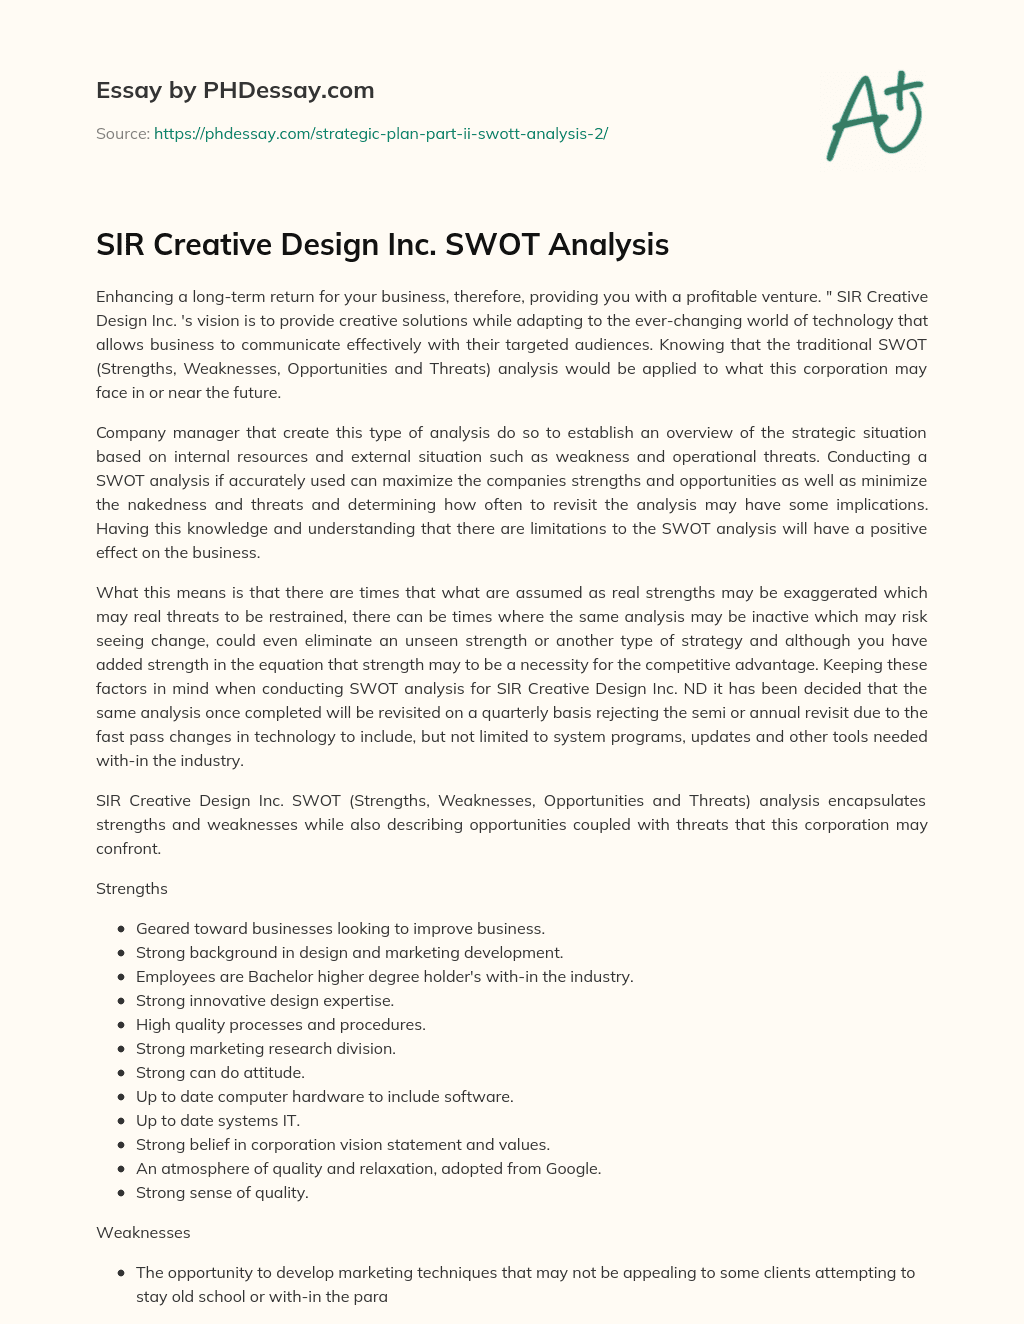 SIR Creative Design Inc. SWOT Analysis essay